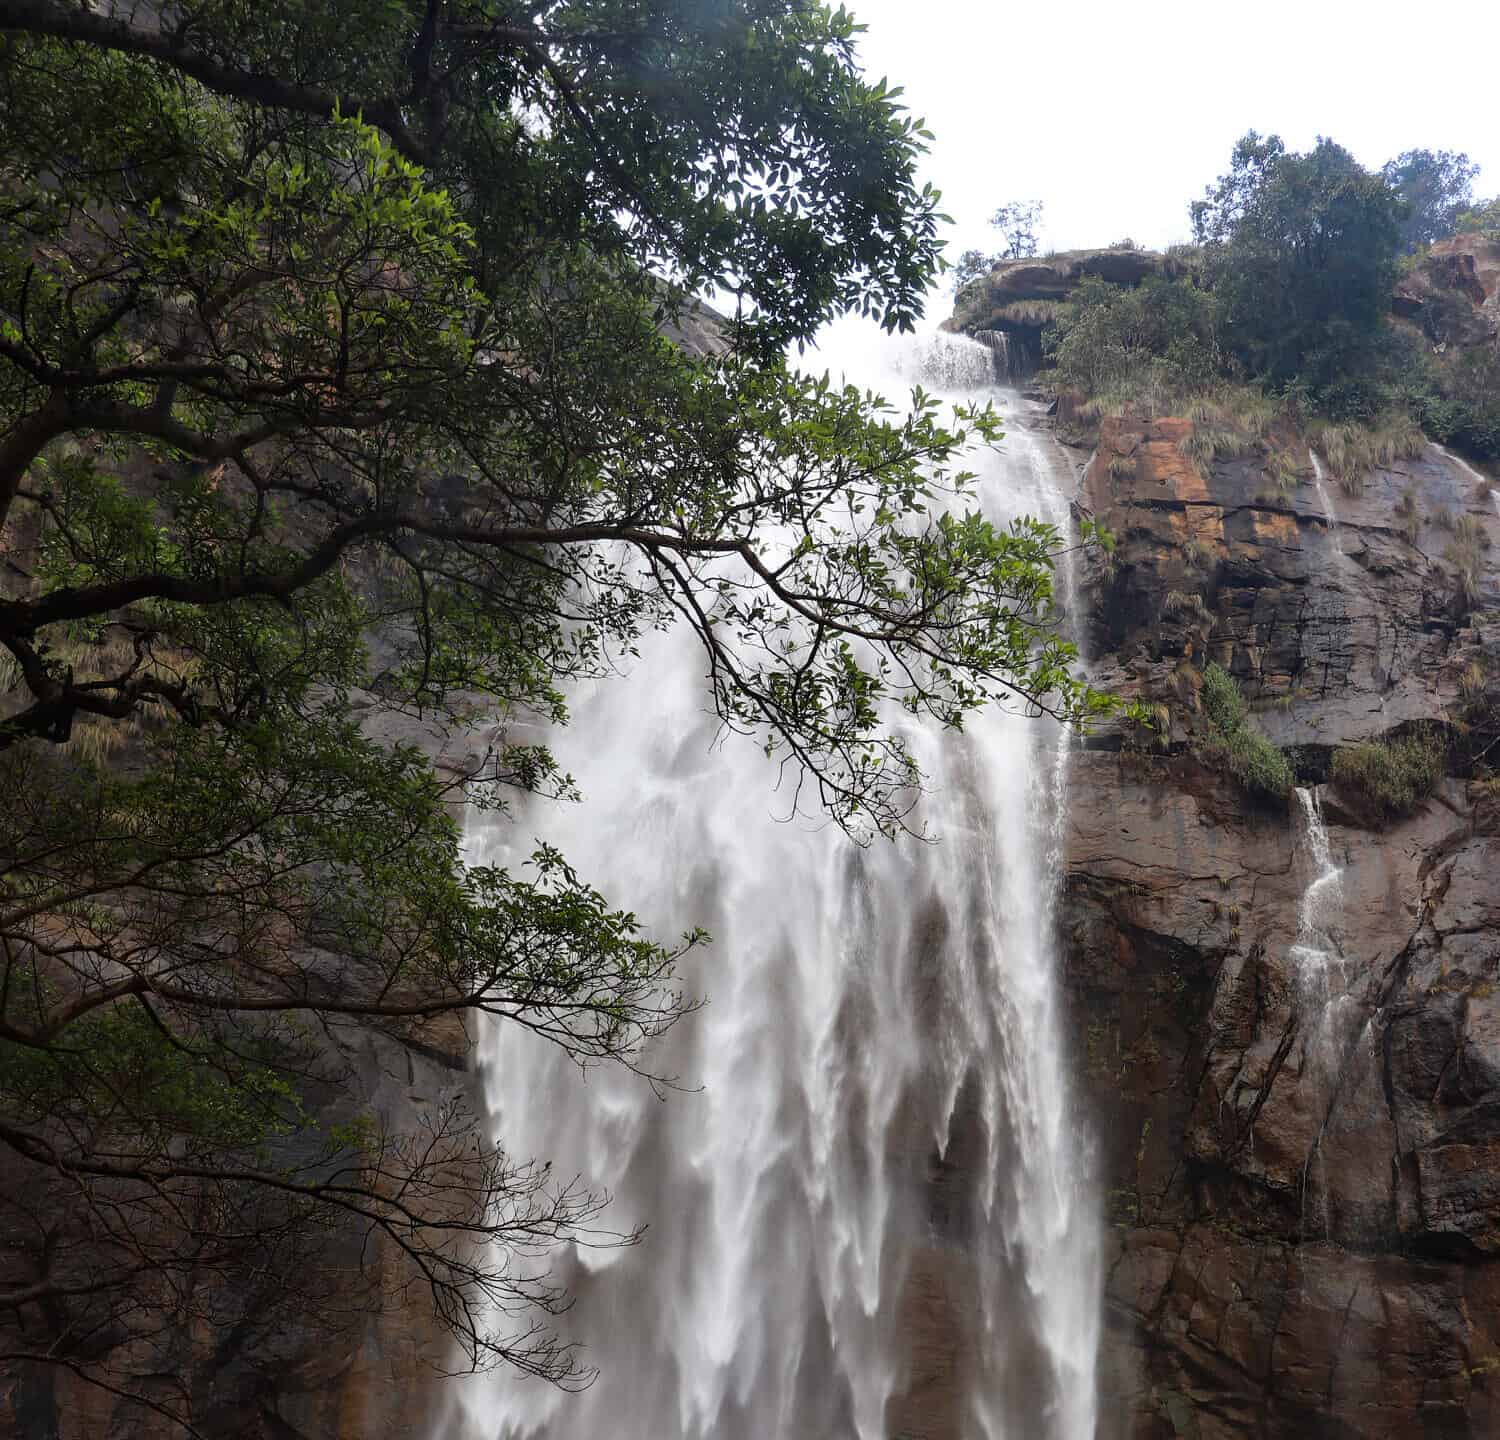 Agaya Gangai waterfalls are located in Kolli Hills of the Eastern Ghats, in India. Panchanathi, a jungle stream, cascades down as the Agaya Gangai.